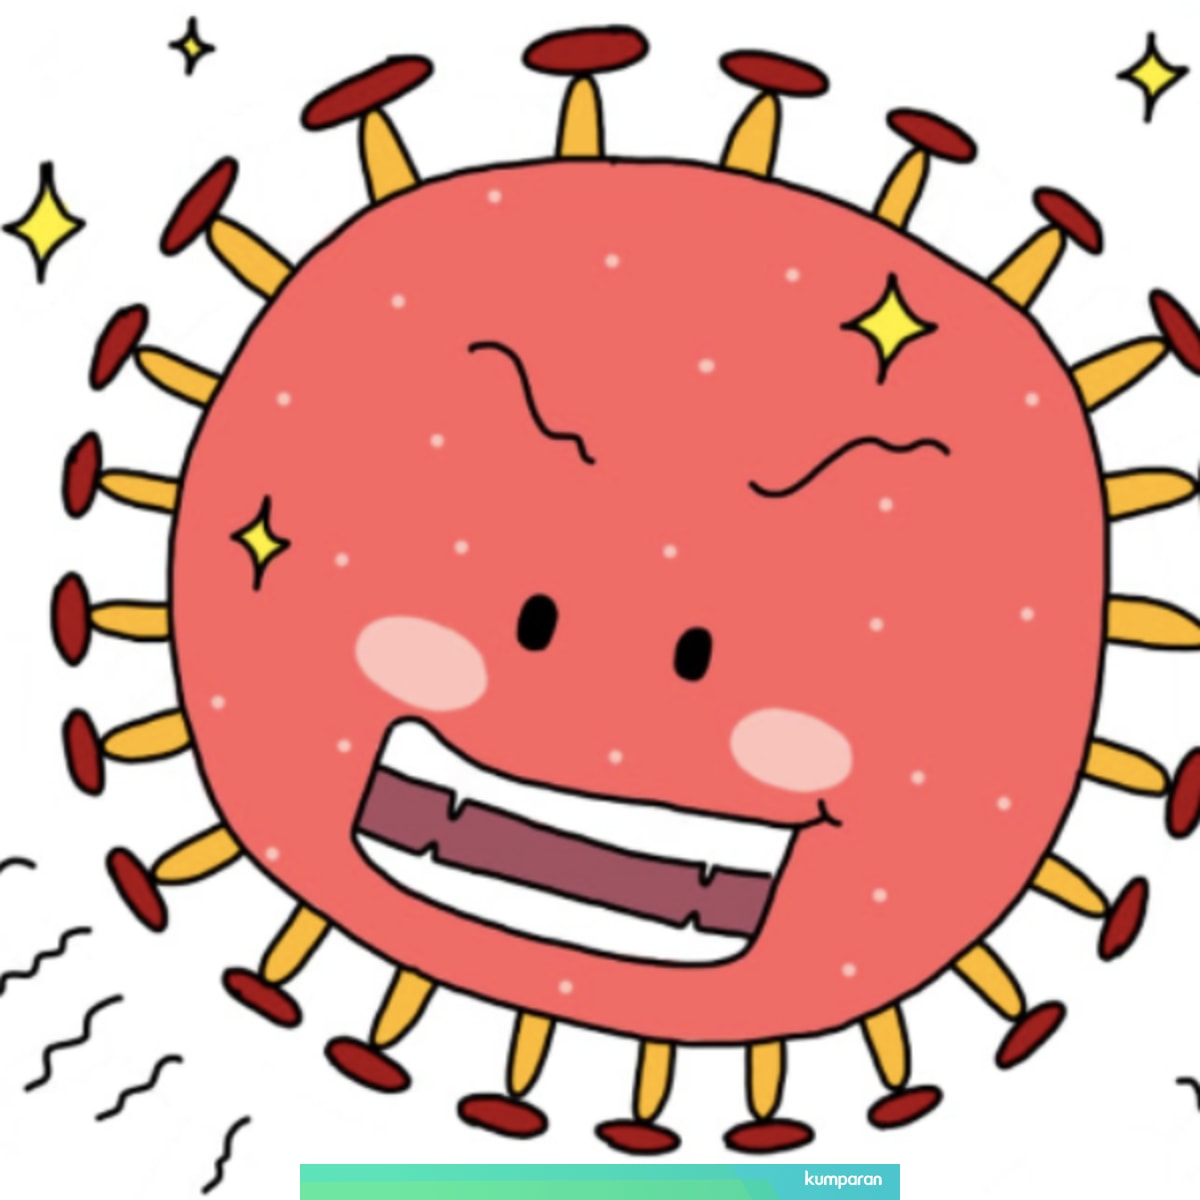 Gambar Edukasi Virus Corona Anak Tk | Gambar Mewarnai ...